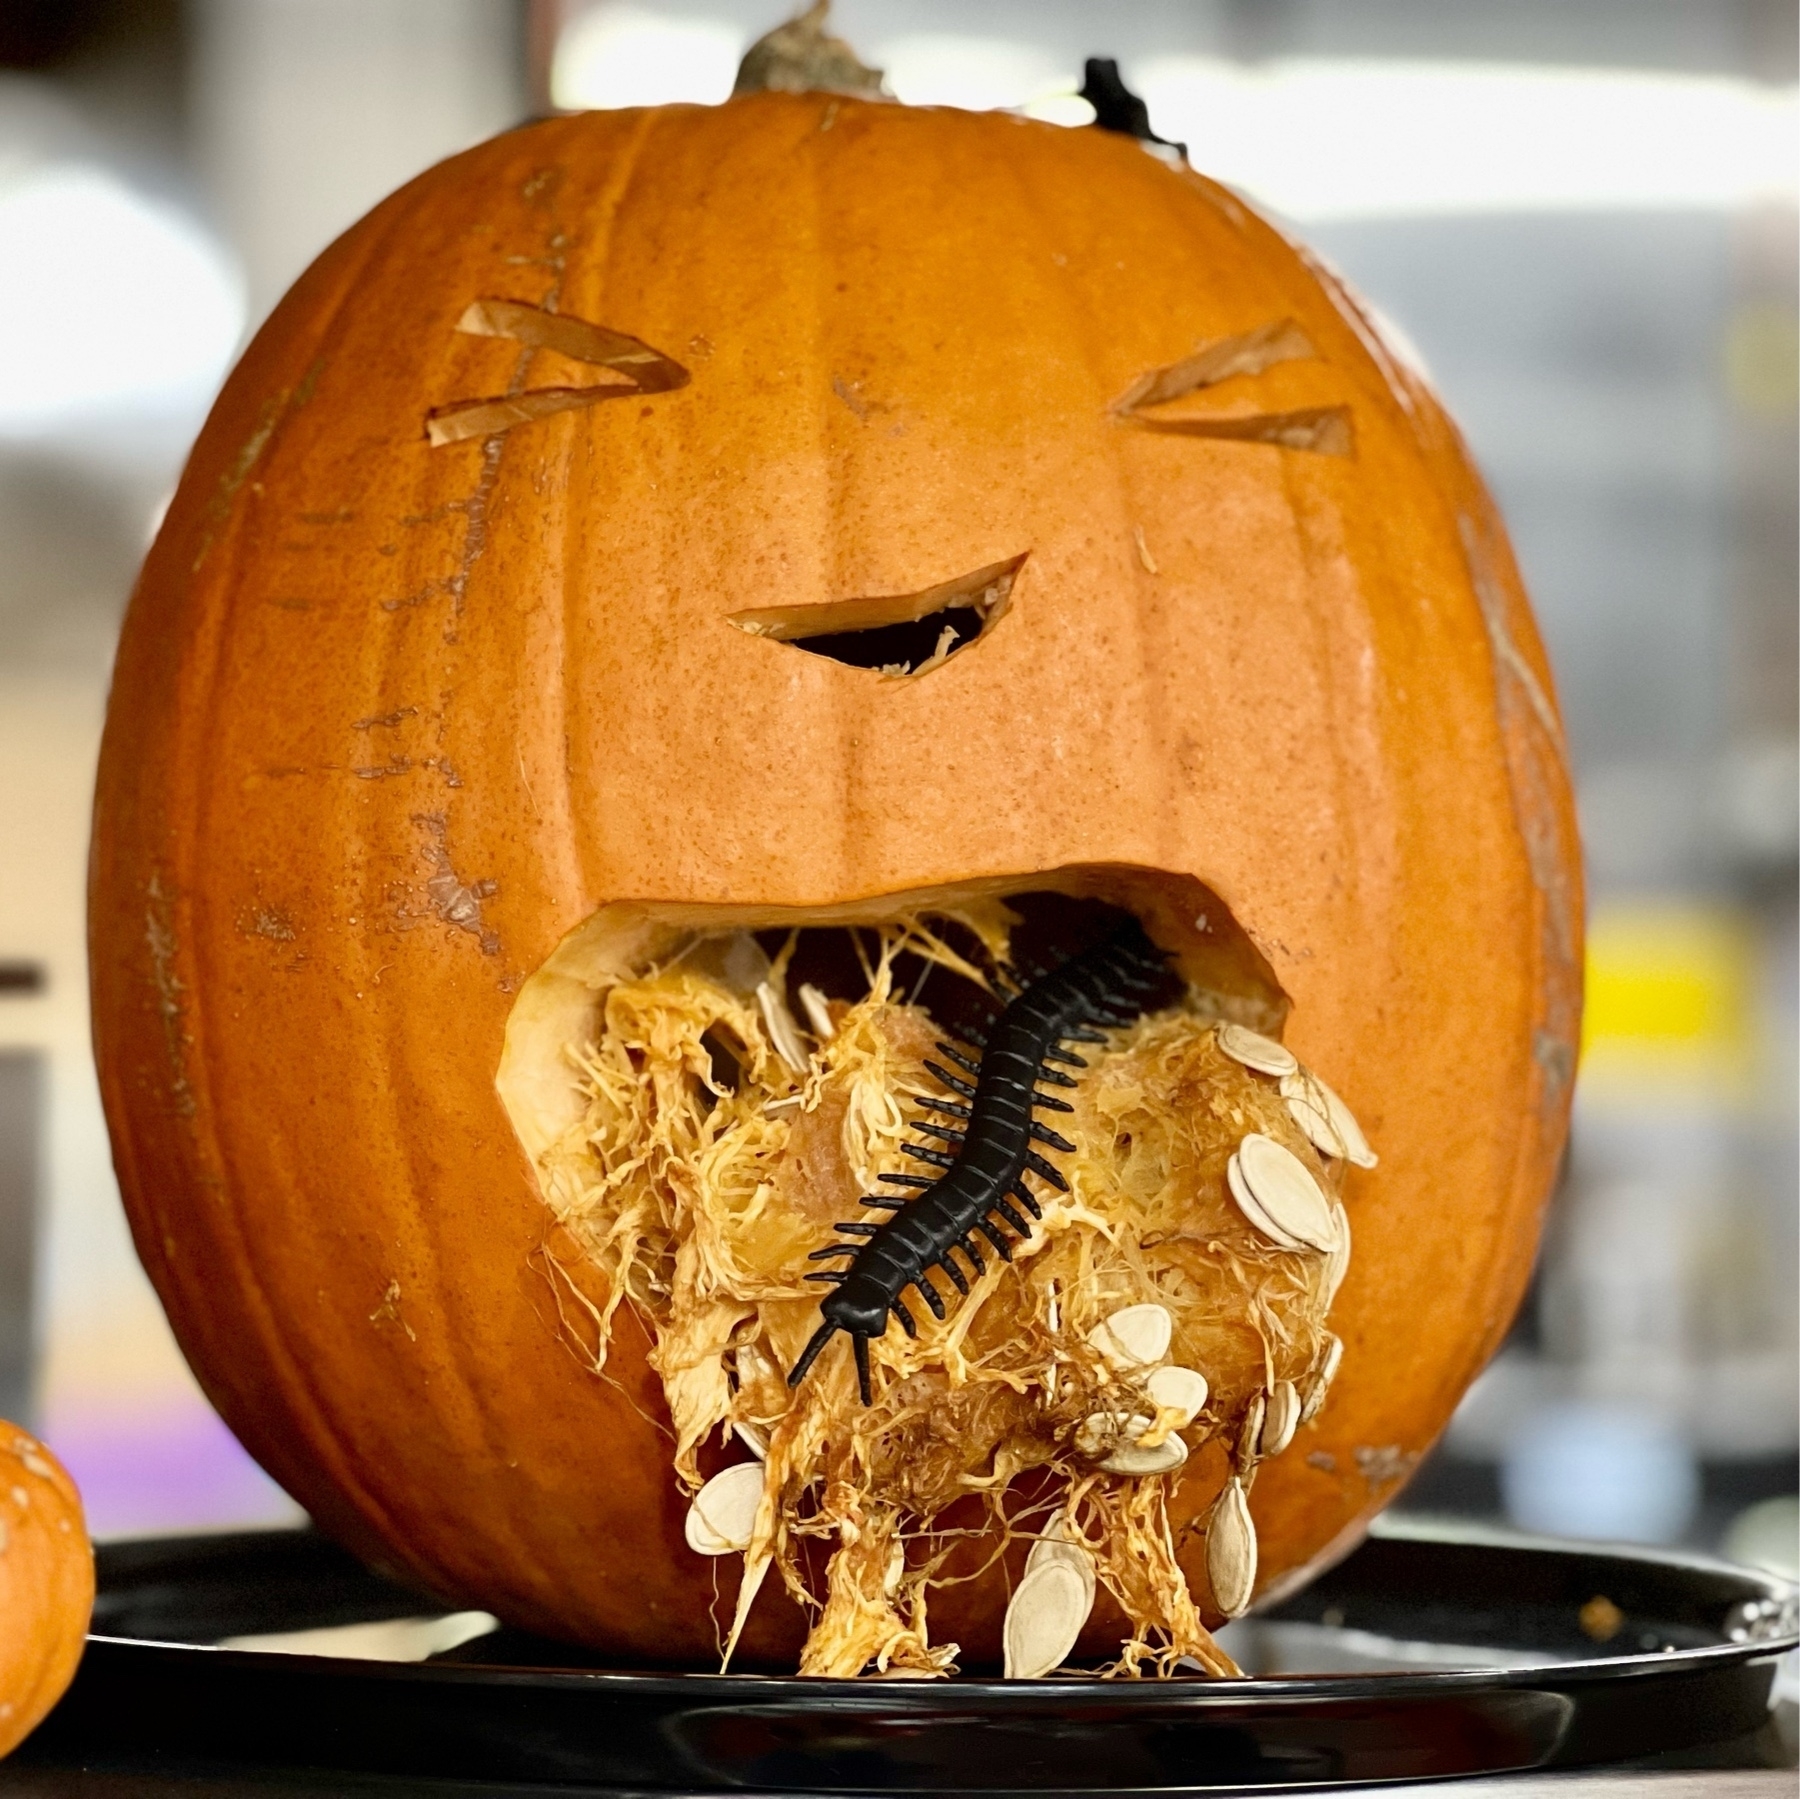 A Halloween pumpkin "vomiting" leaves. 